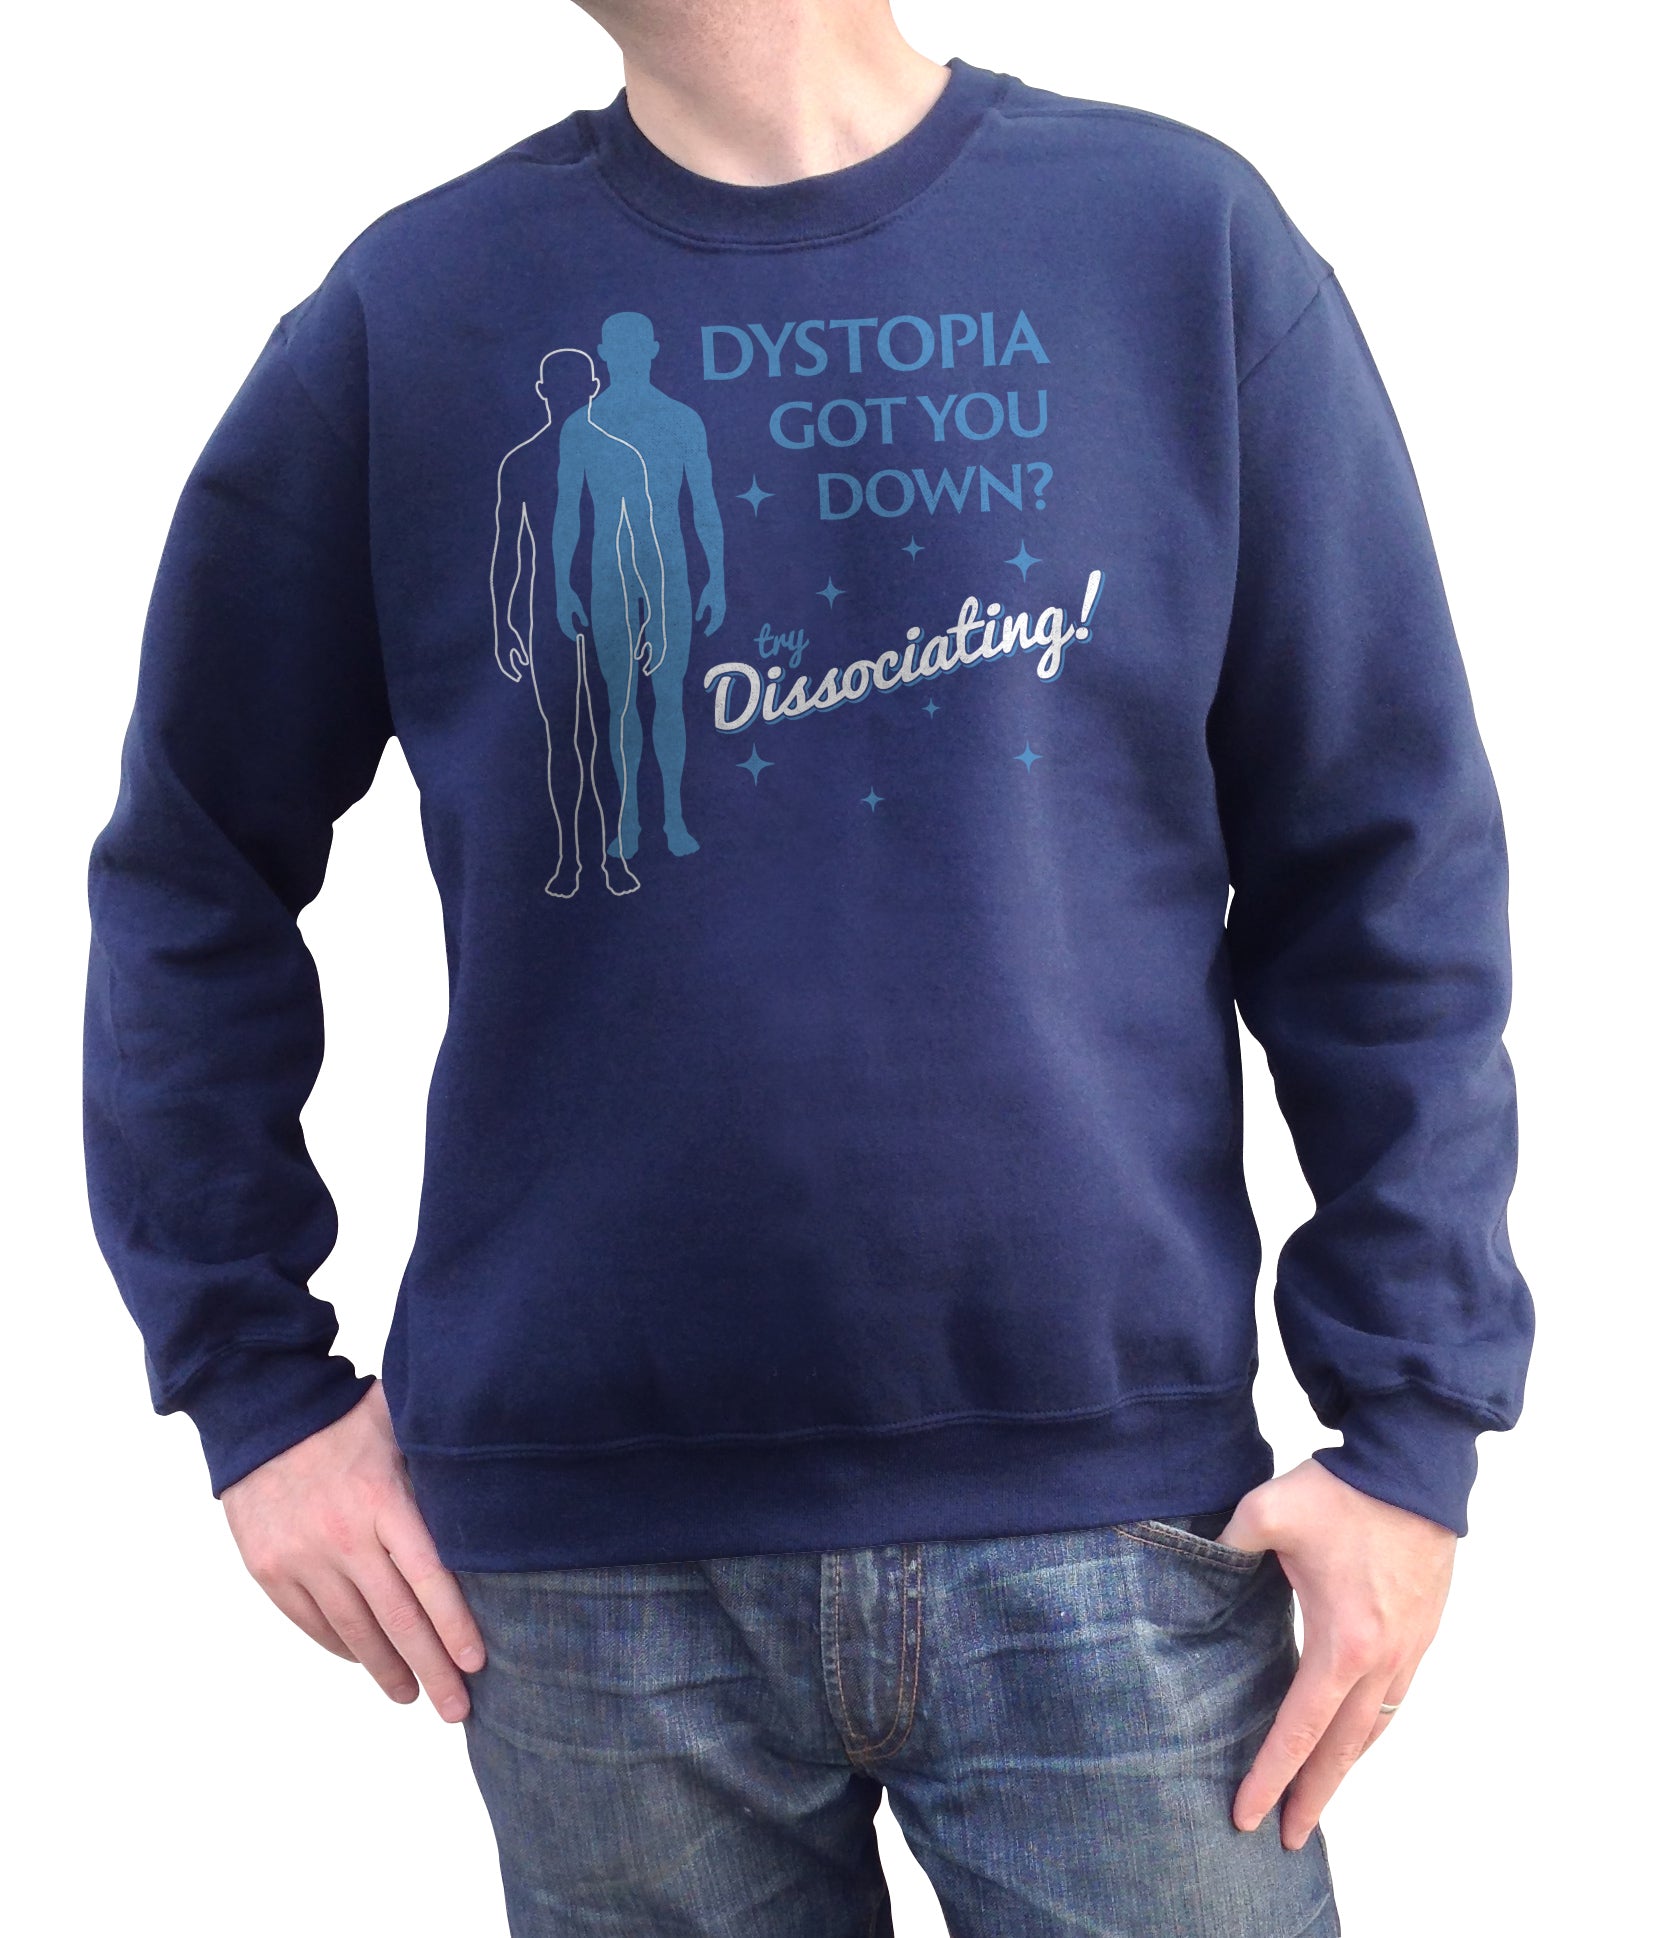 Unisex Dystopia Got You Down? Try Dissociating! Sweatshirt